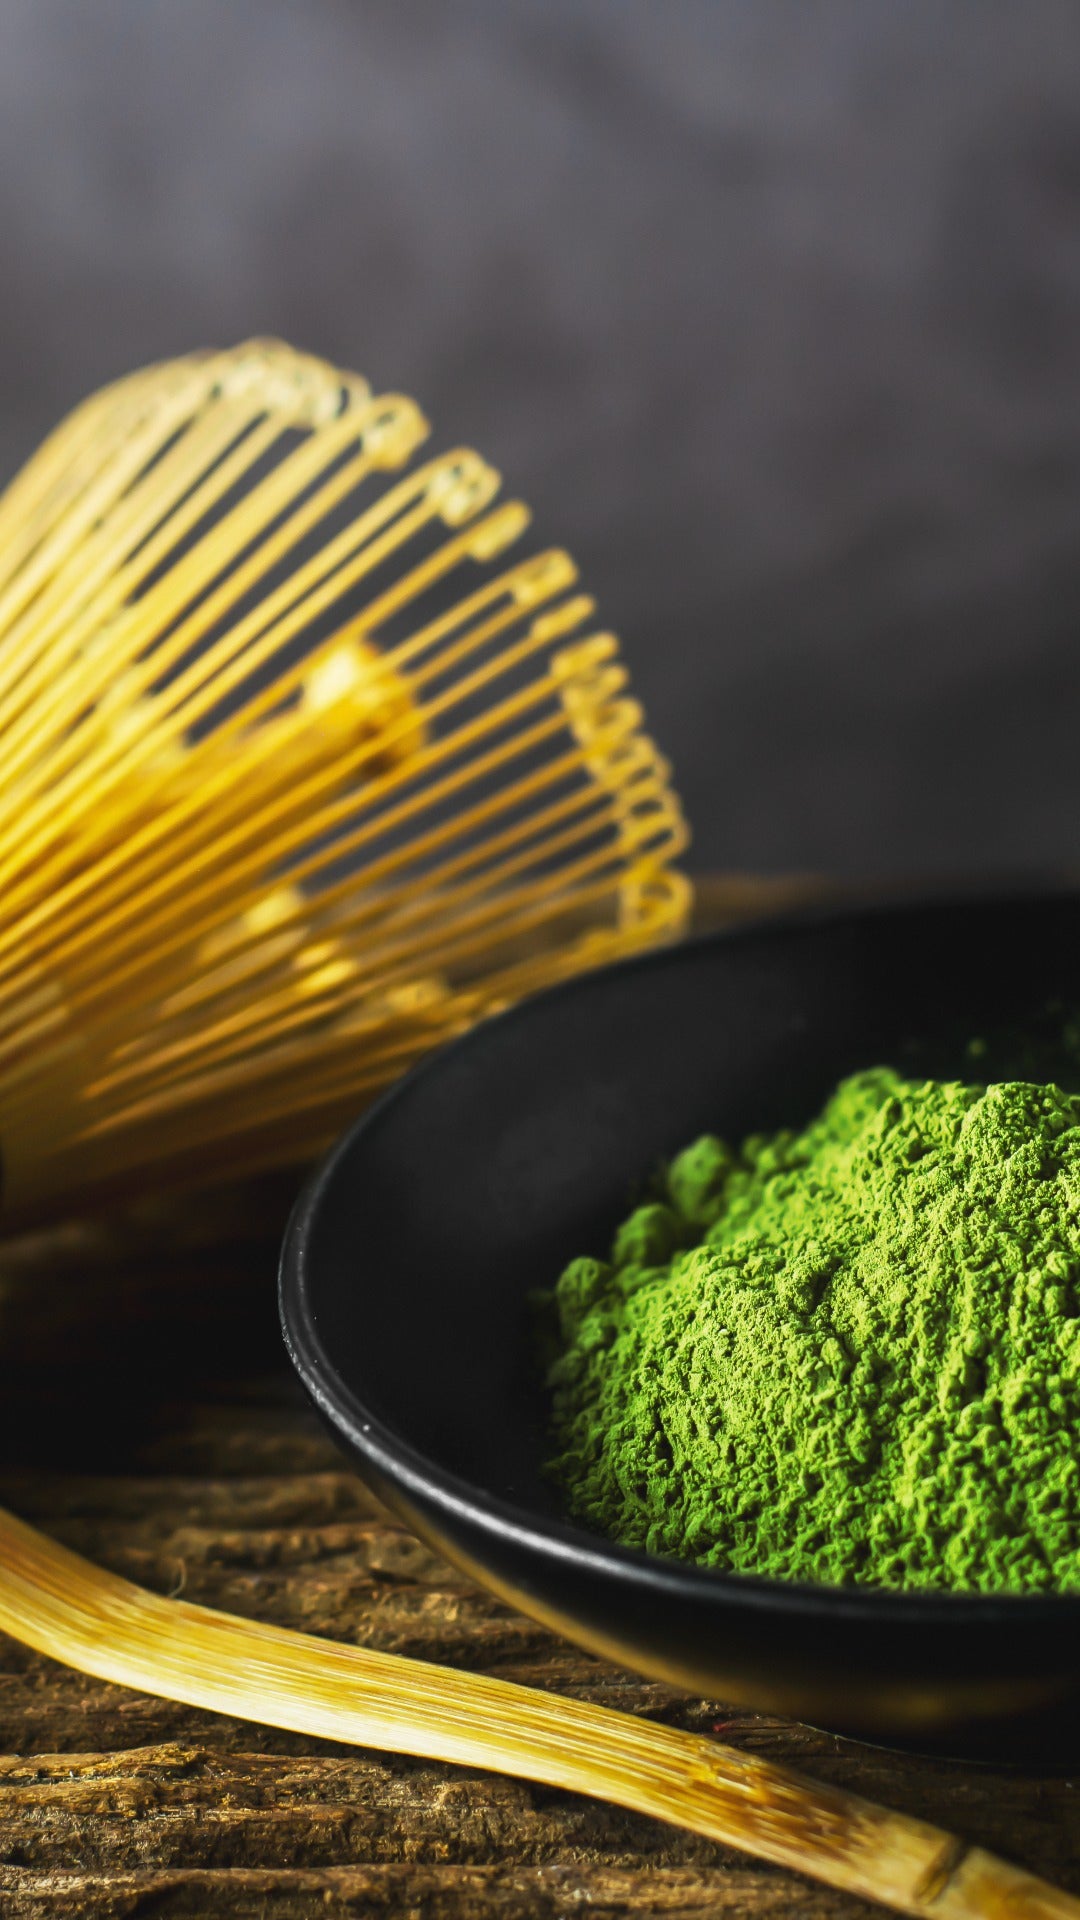 Matcha, green tea powder, bamboo scoop and whisk, chashaku, chasen, wooden table, dark background